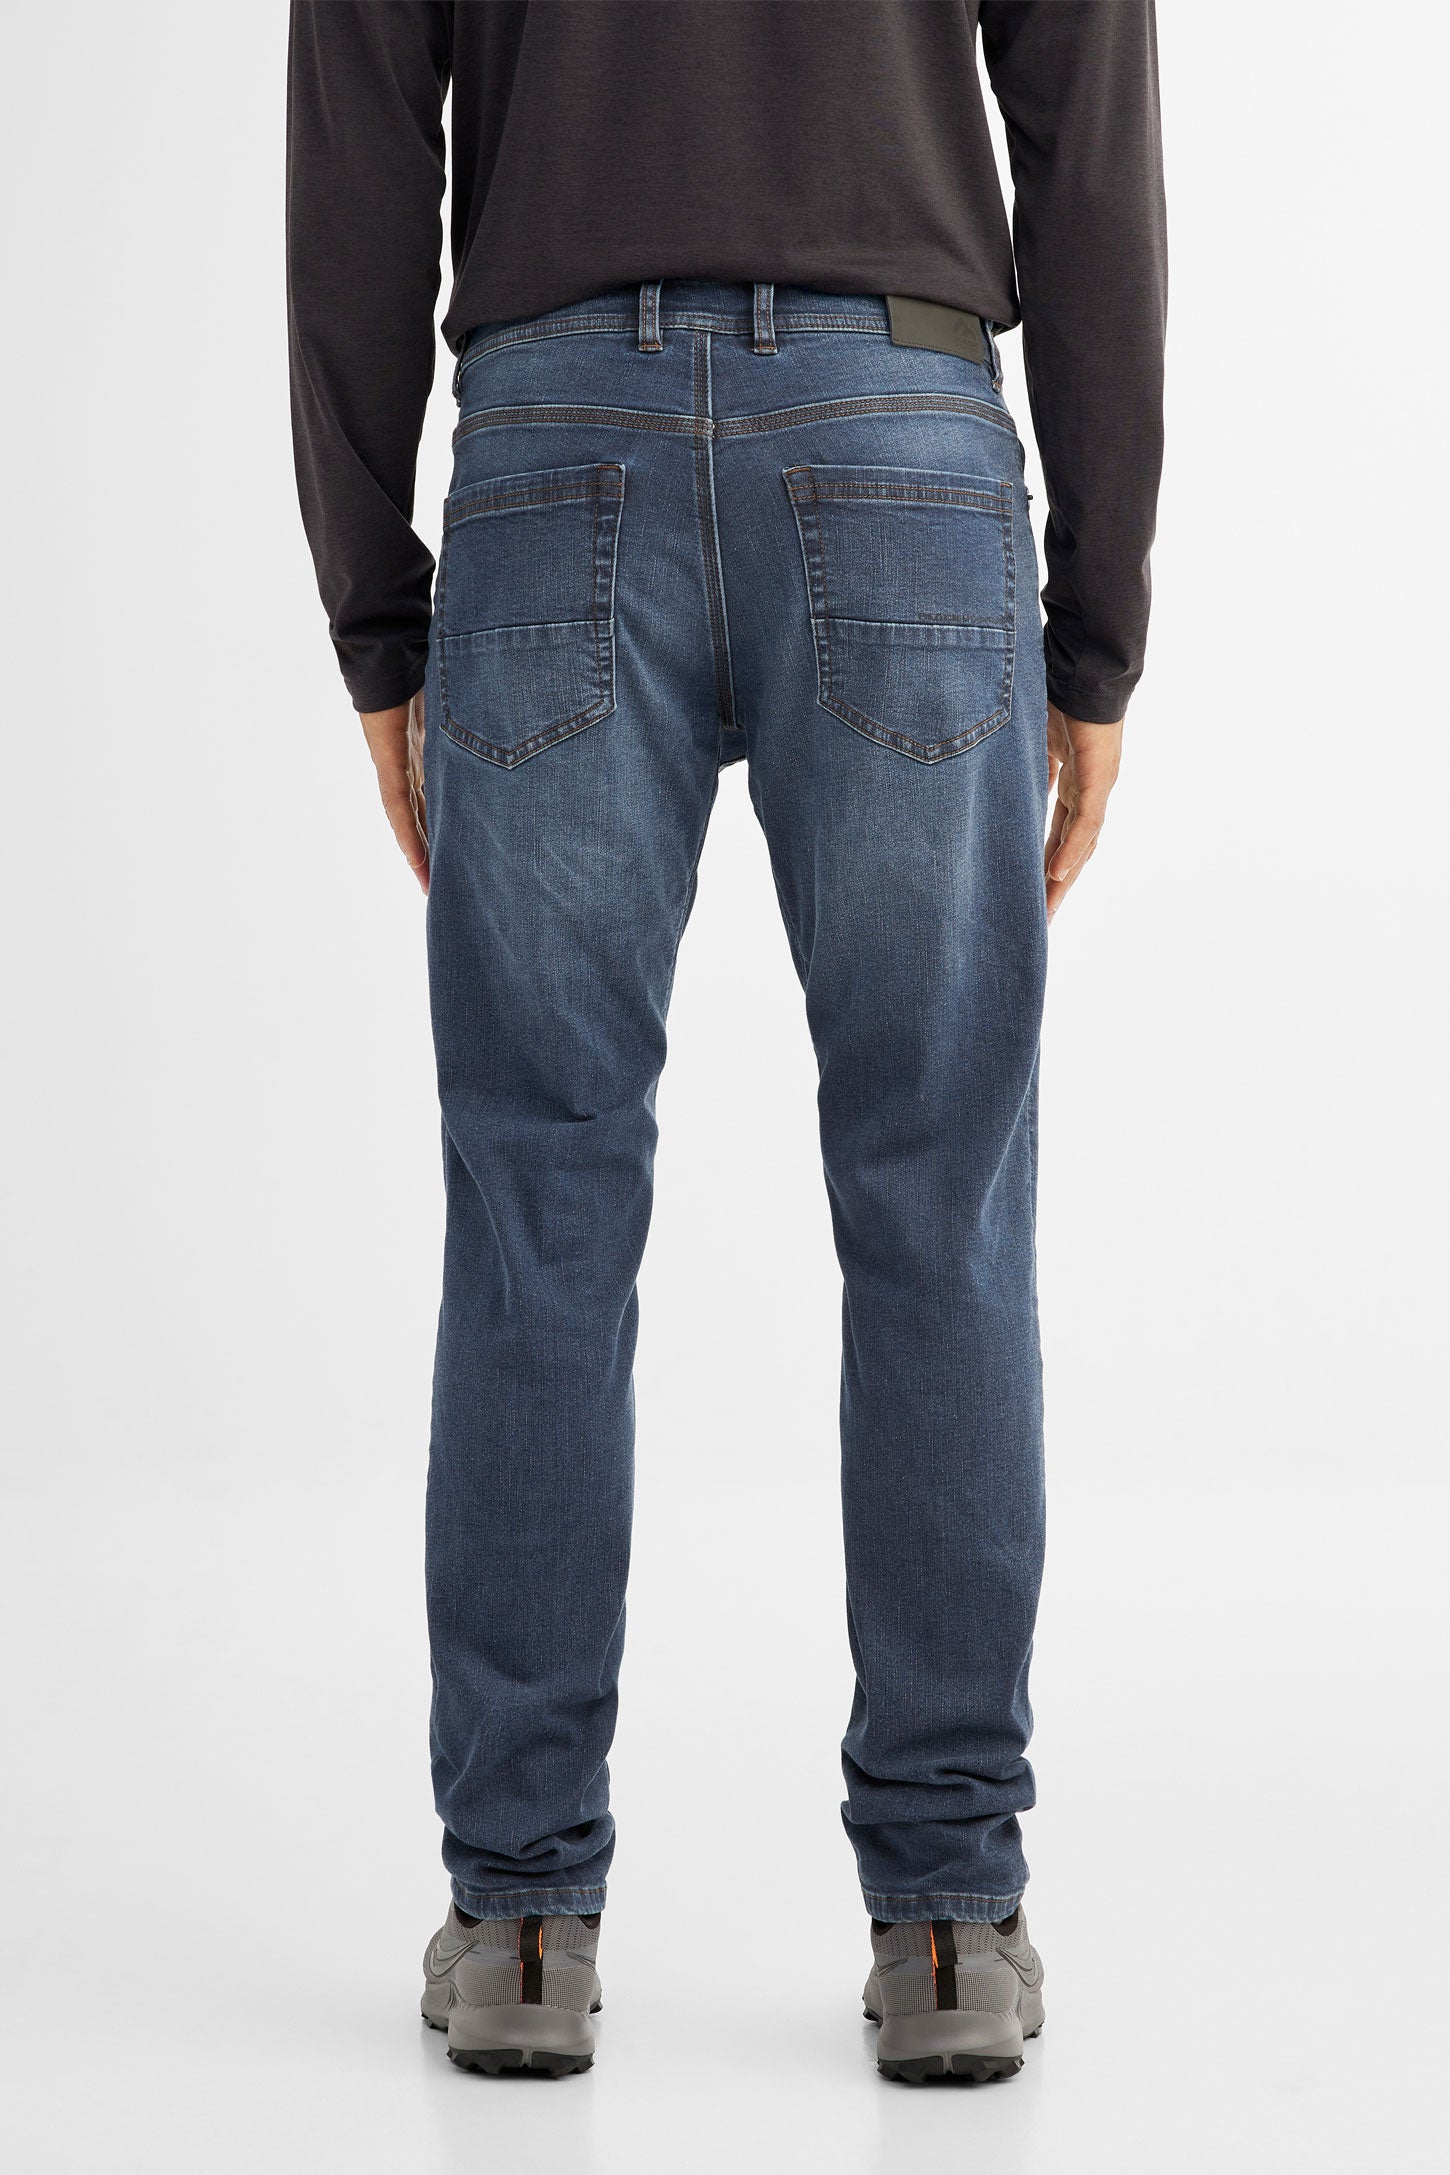 Jeans thermal extensible BM - Homme && DENIM FONCE